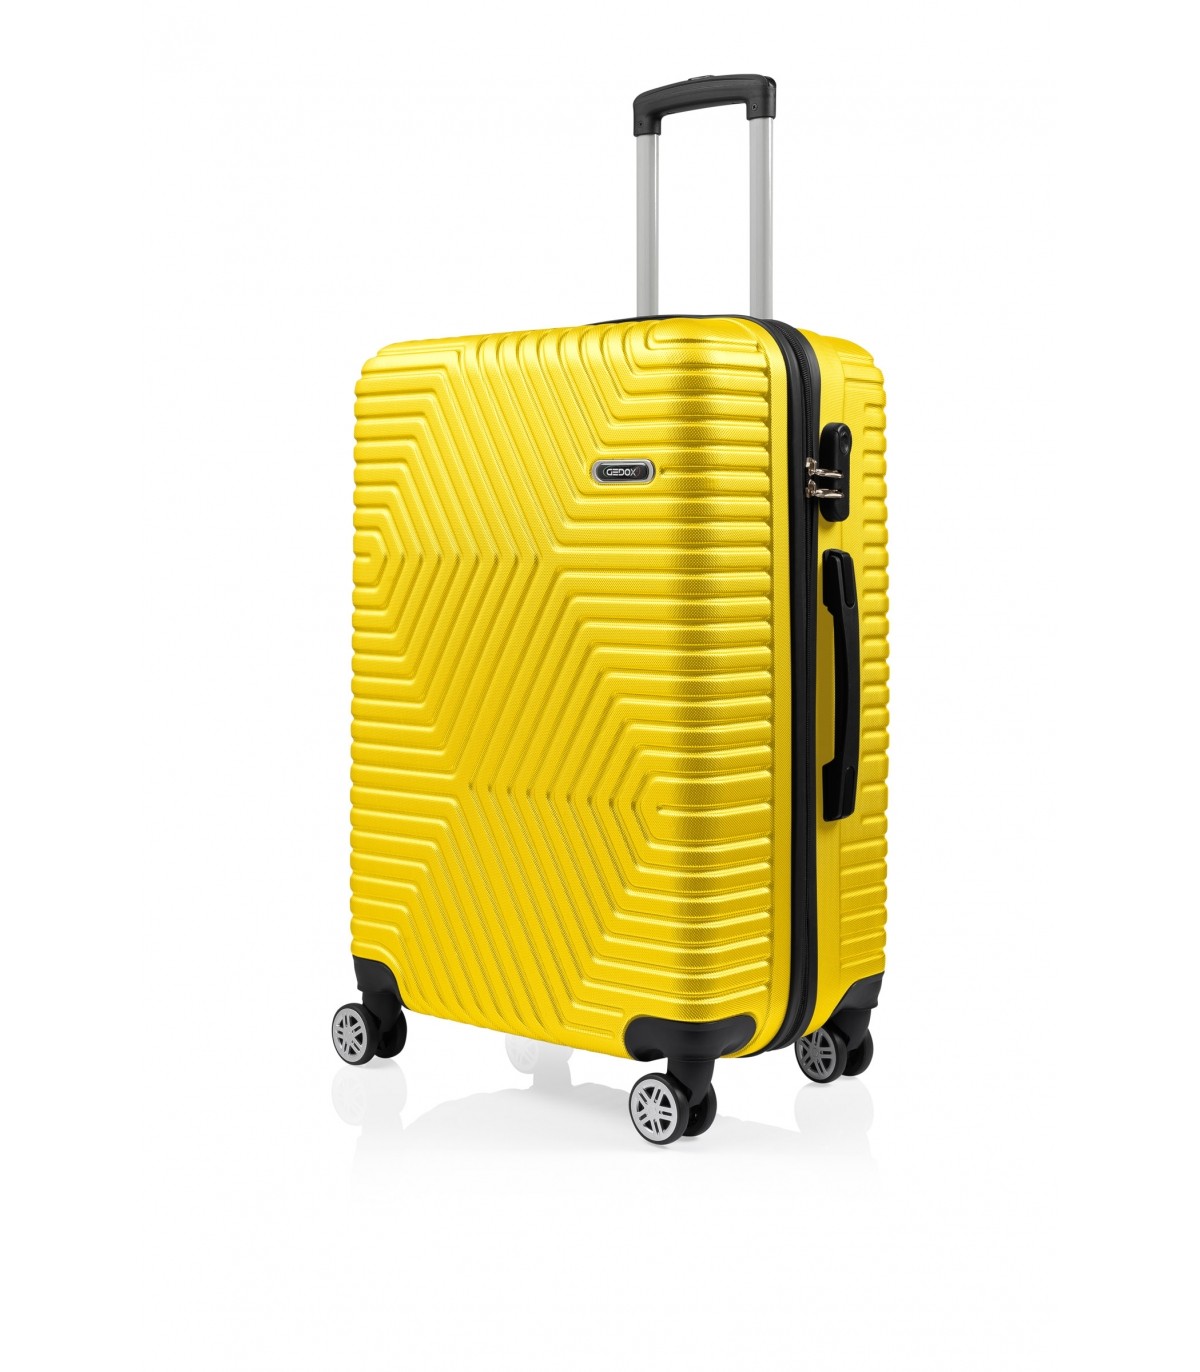 Gedox GDX600 Abs Plastik, Orta Boy Çekçekli Seyahat Valizi - Sarı